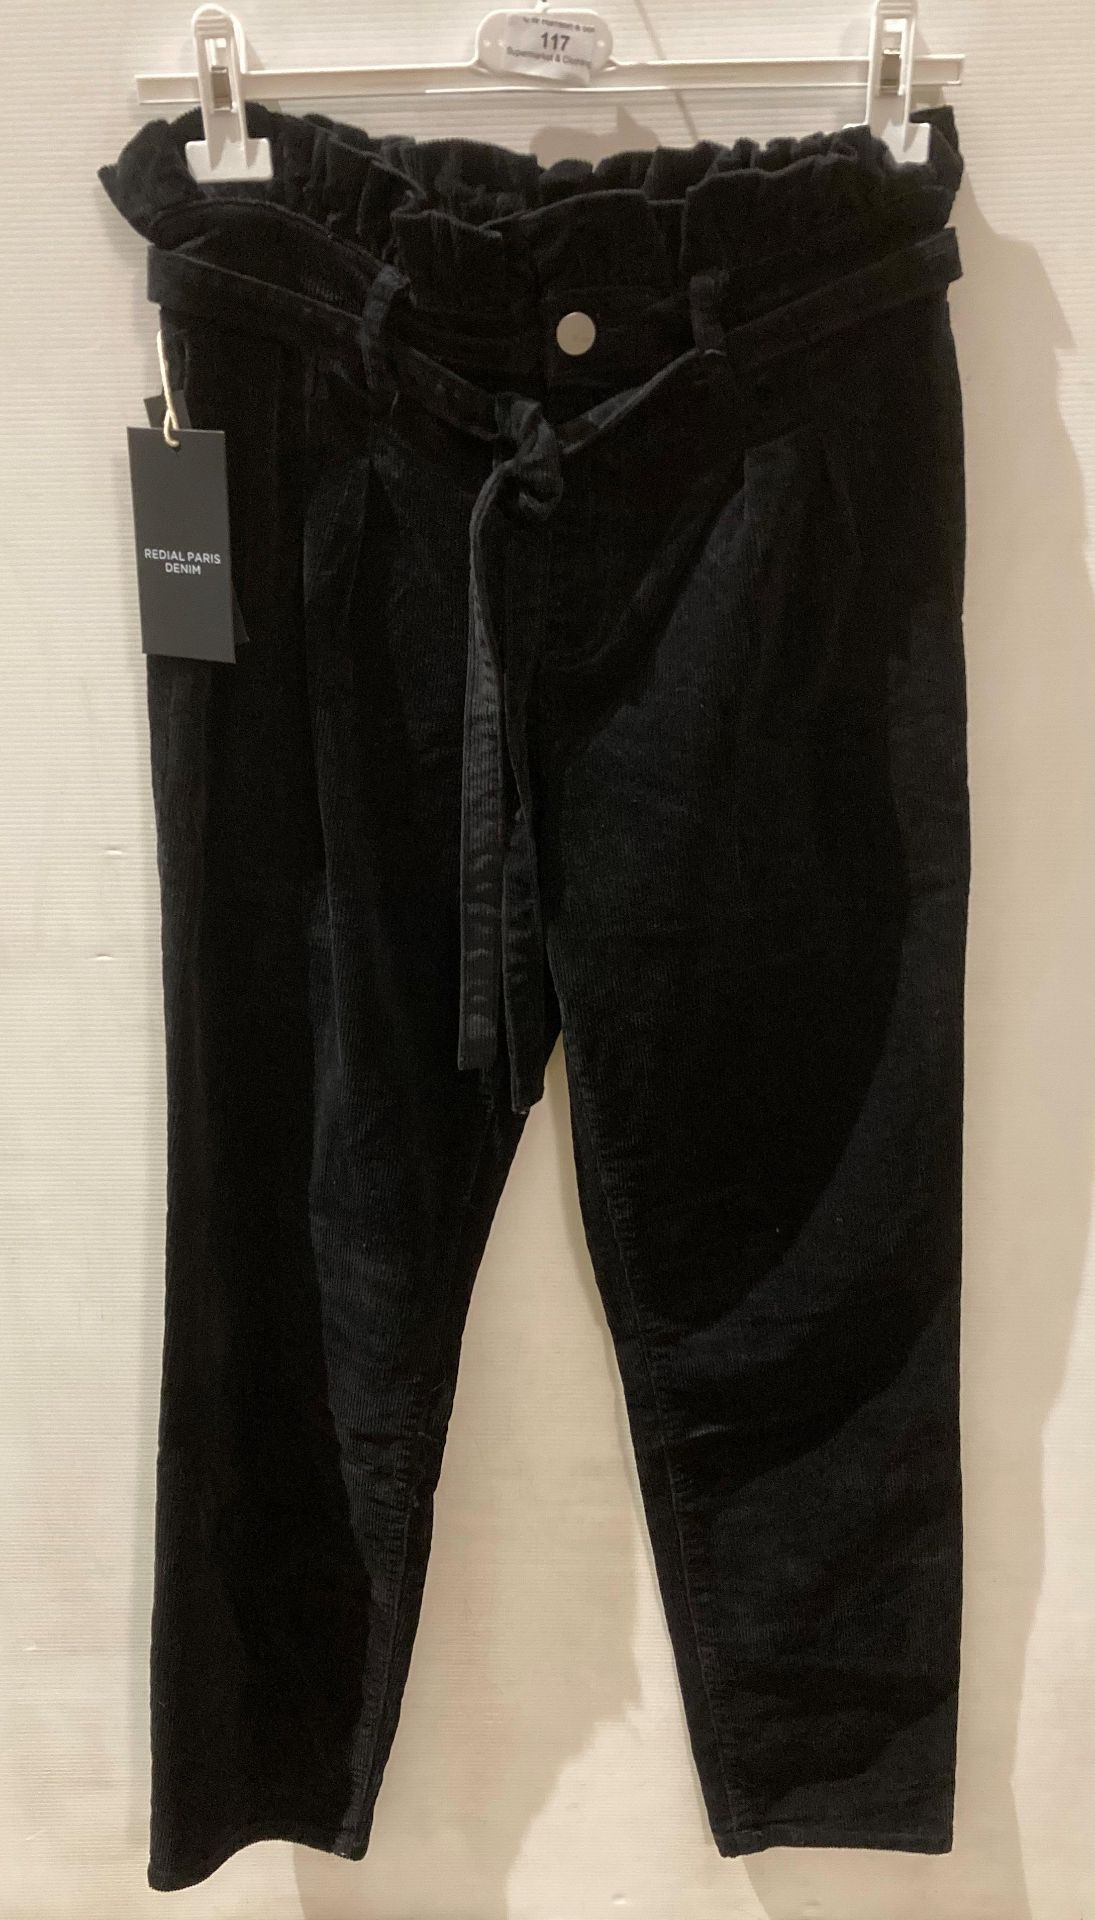 3 x Pro Redial Paris black corduroy high waist jeans, sizes 8,